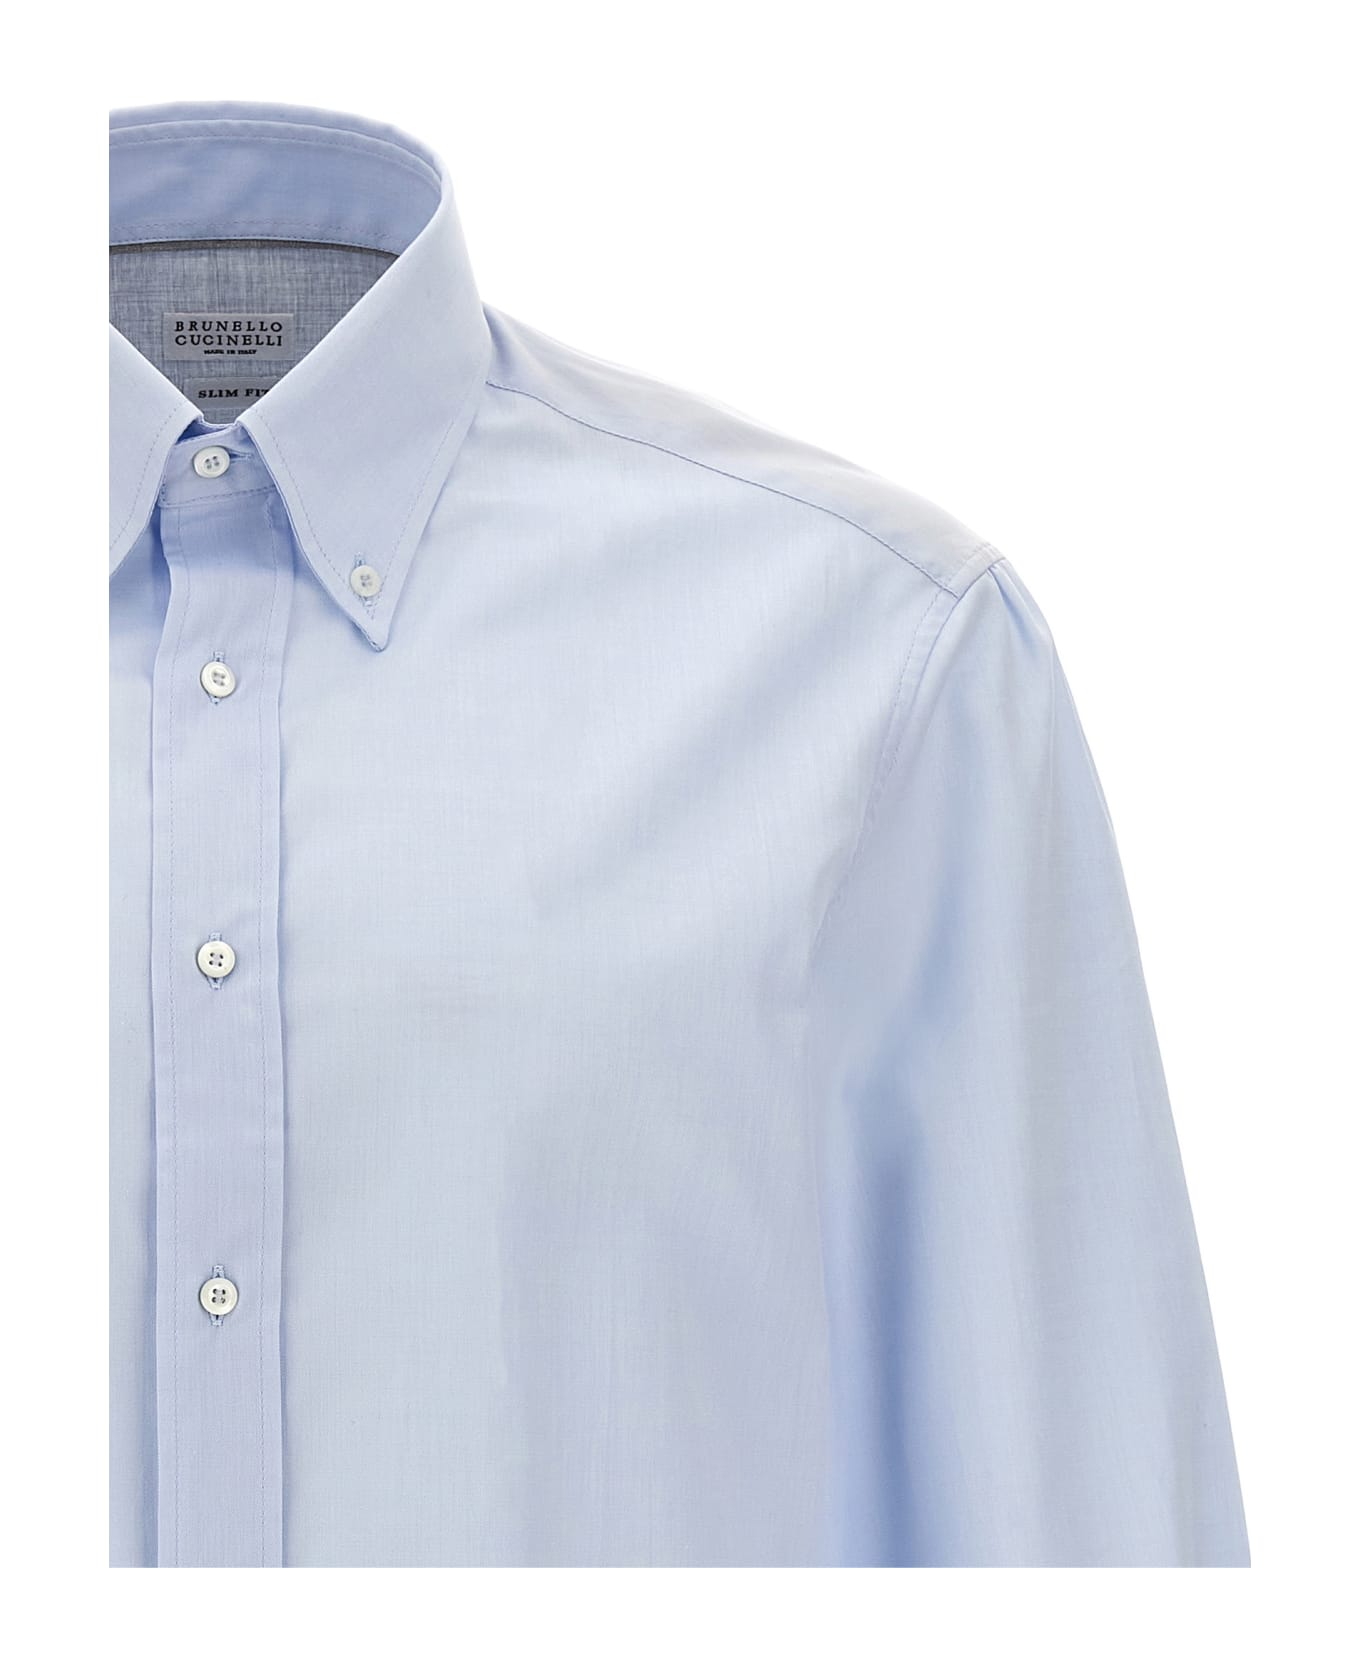 Brunello Cucinelli Cotton Shirt - Light Blue